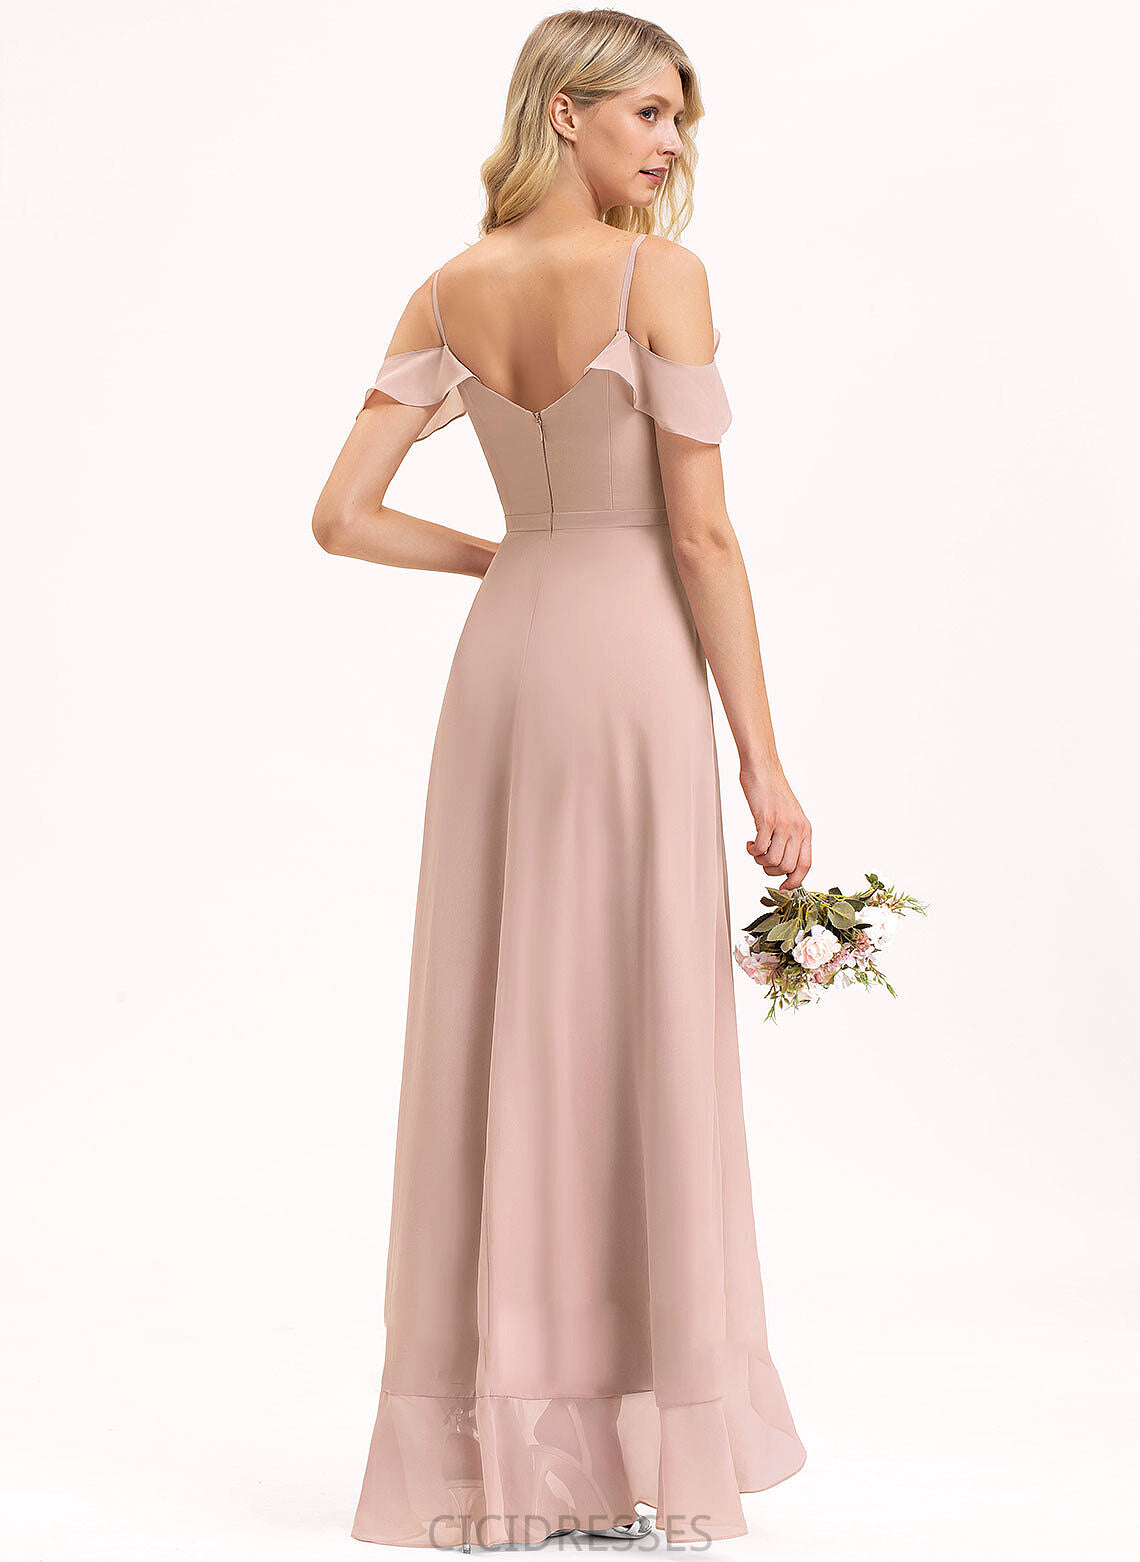 Neckline CascadingRuffles Fabric V-neck Embellishment A-Line Length Silhouette Asymmetrical Aubrie Velvet Sleeveless Bridesmaid Dresses